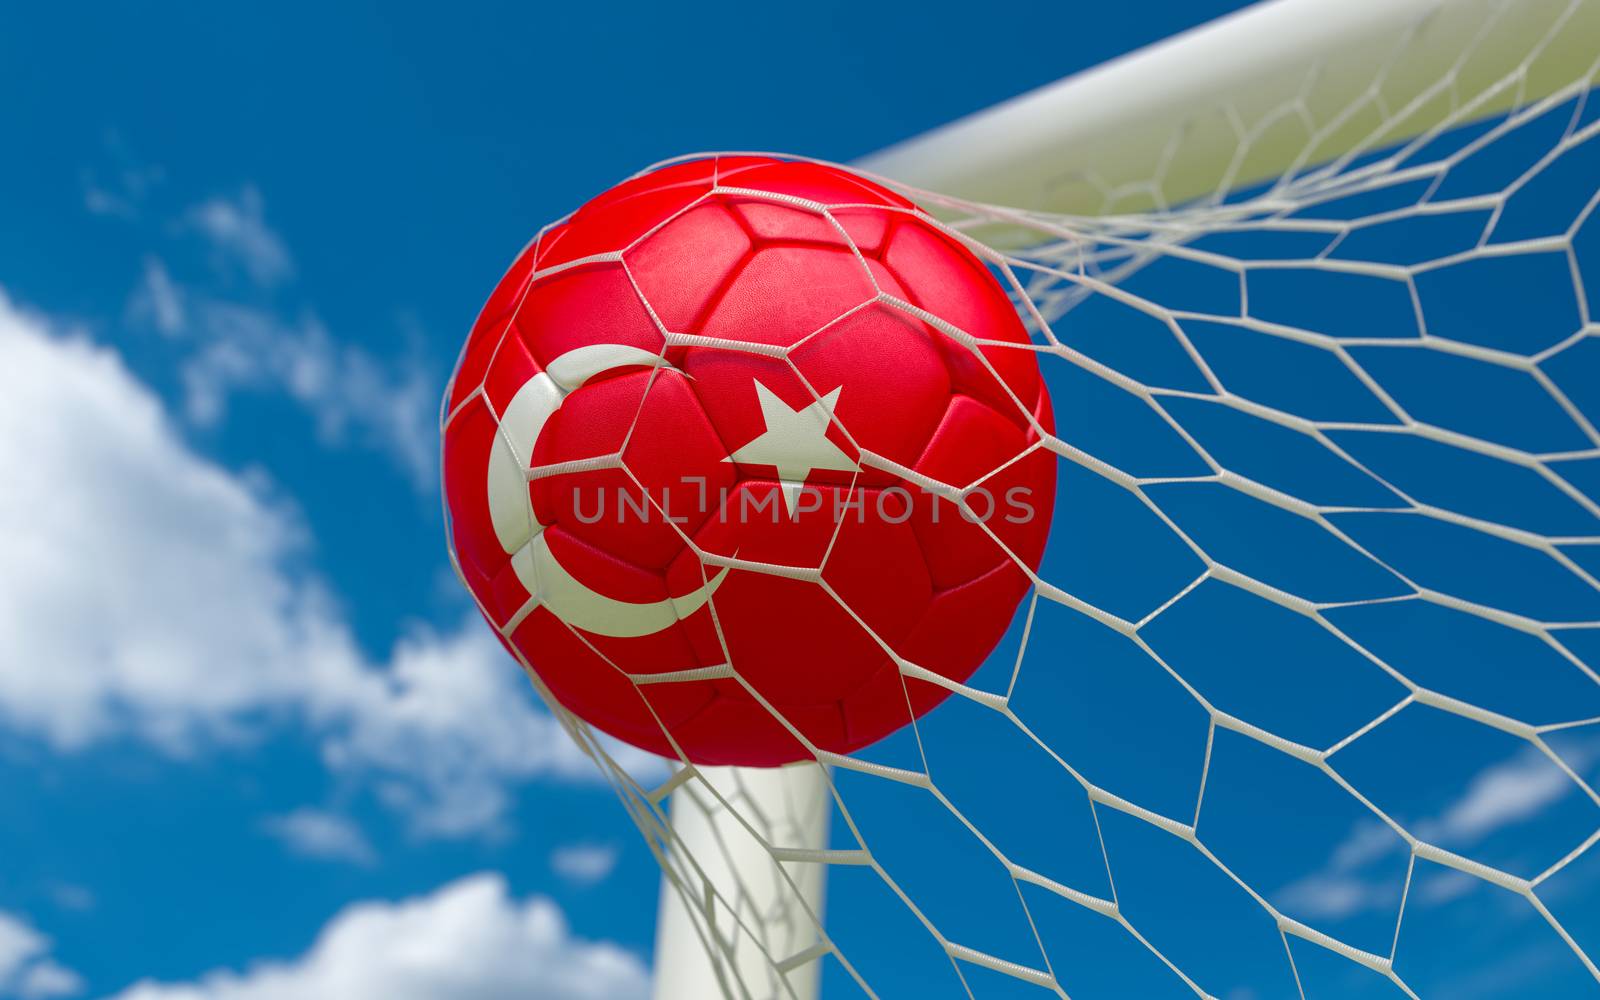 Turkey flag and soccer ball, football in goal net